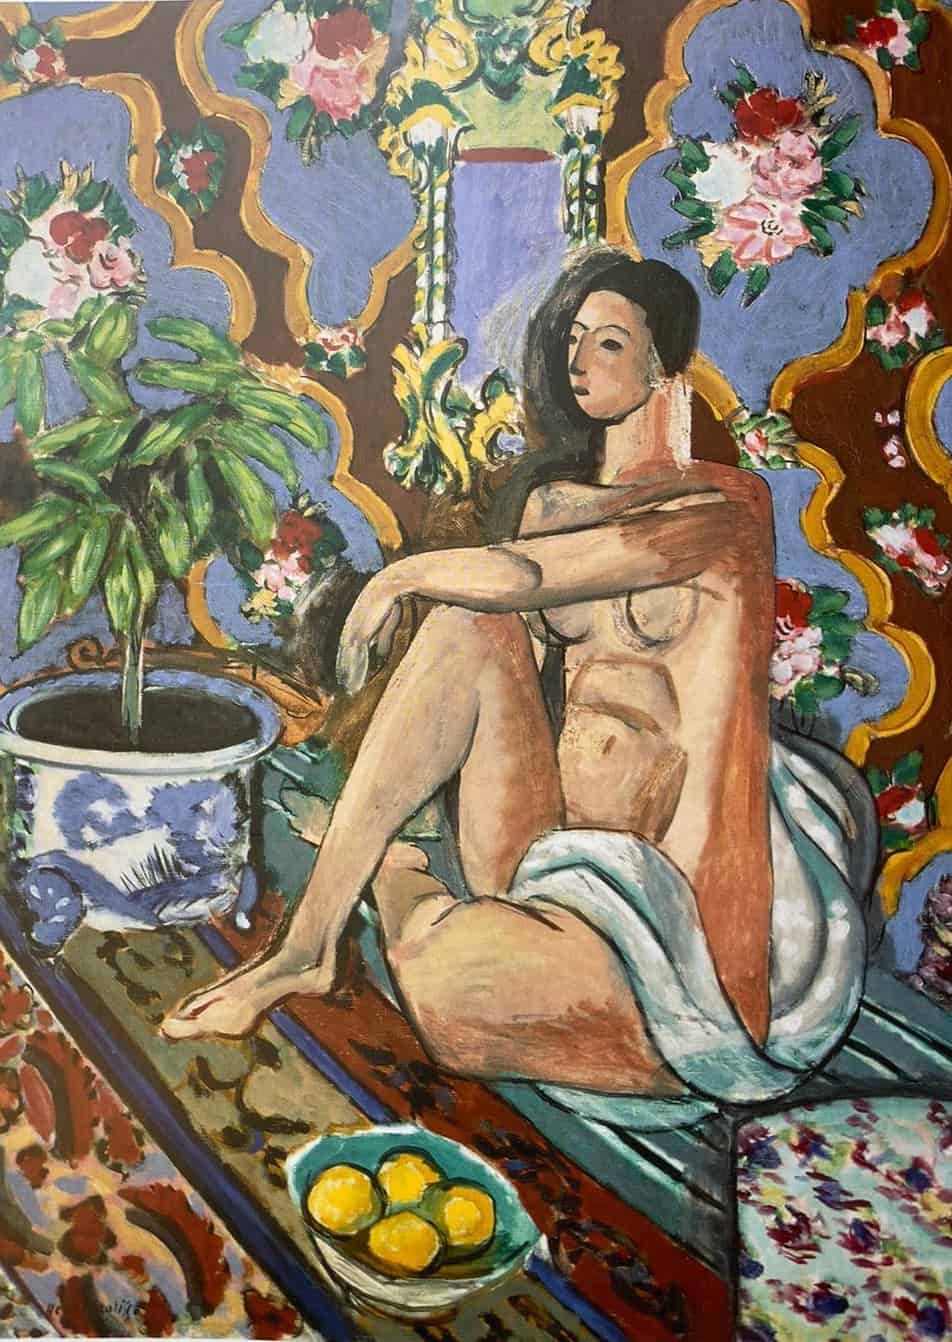 Matisse's Art and Textiles